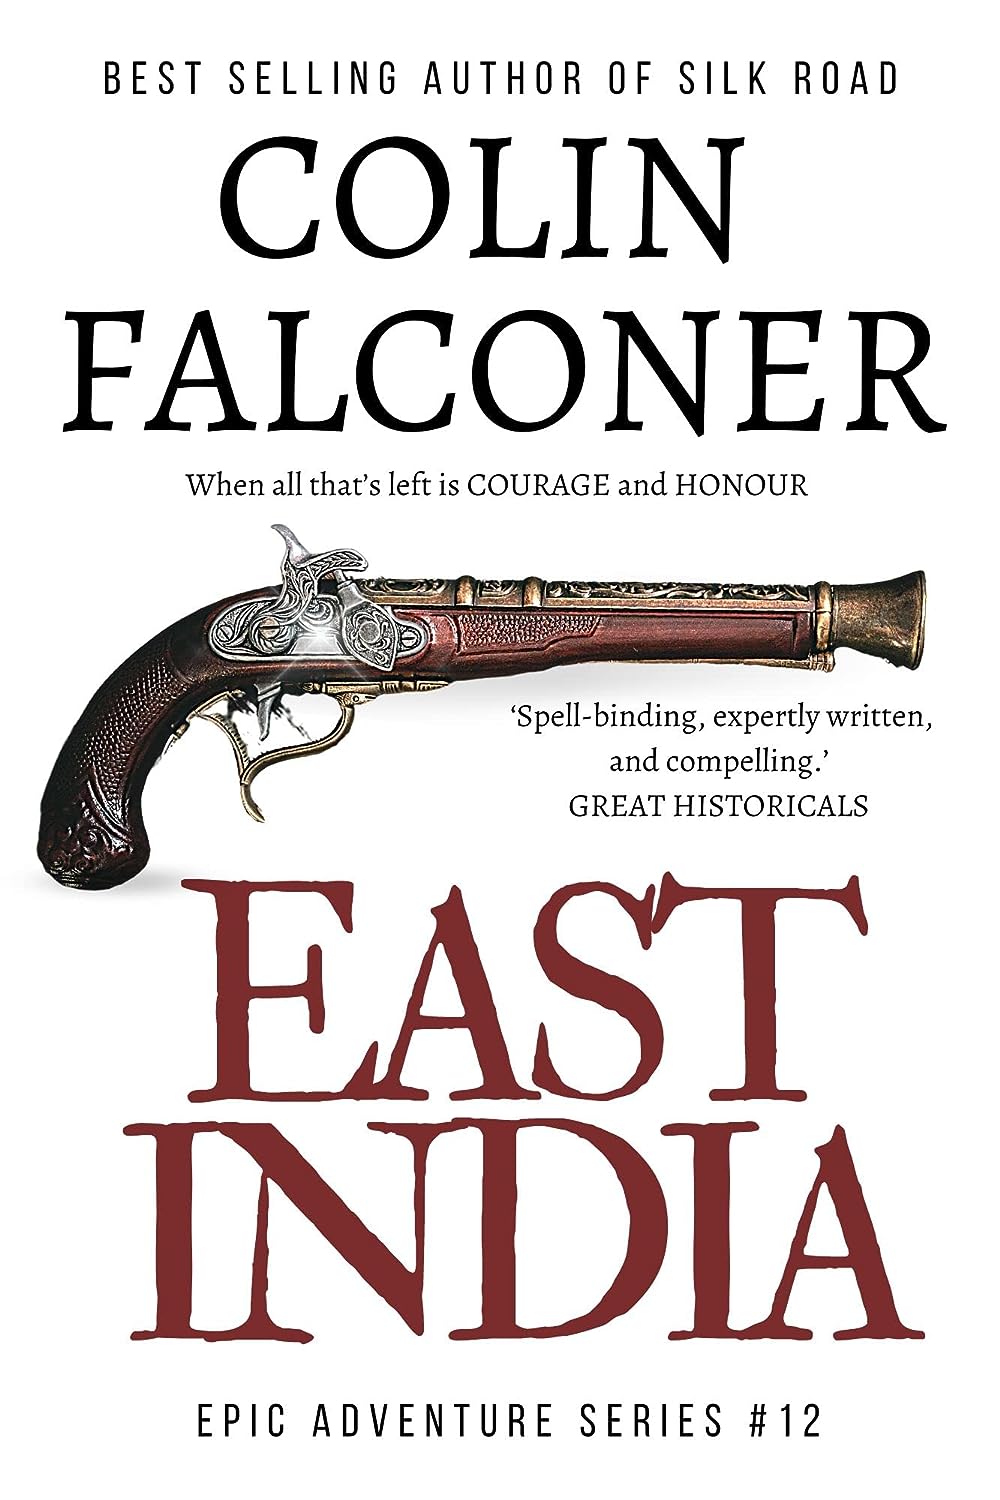 East India